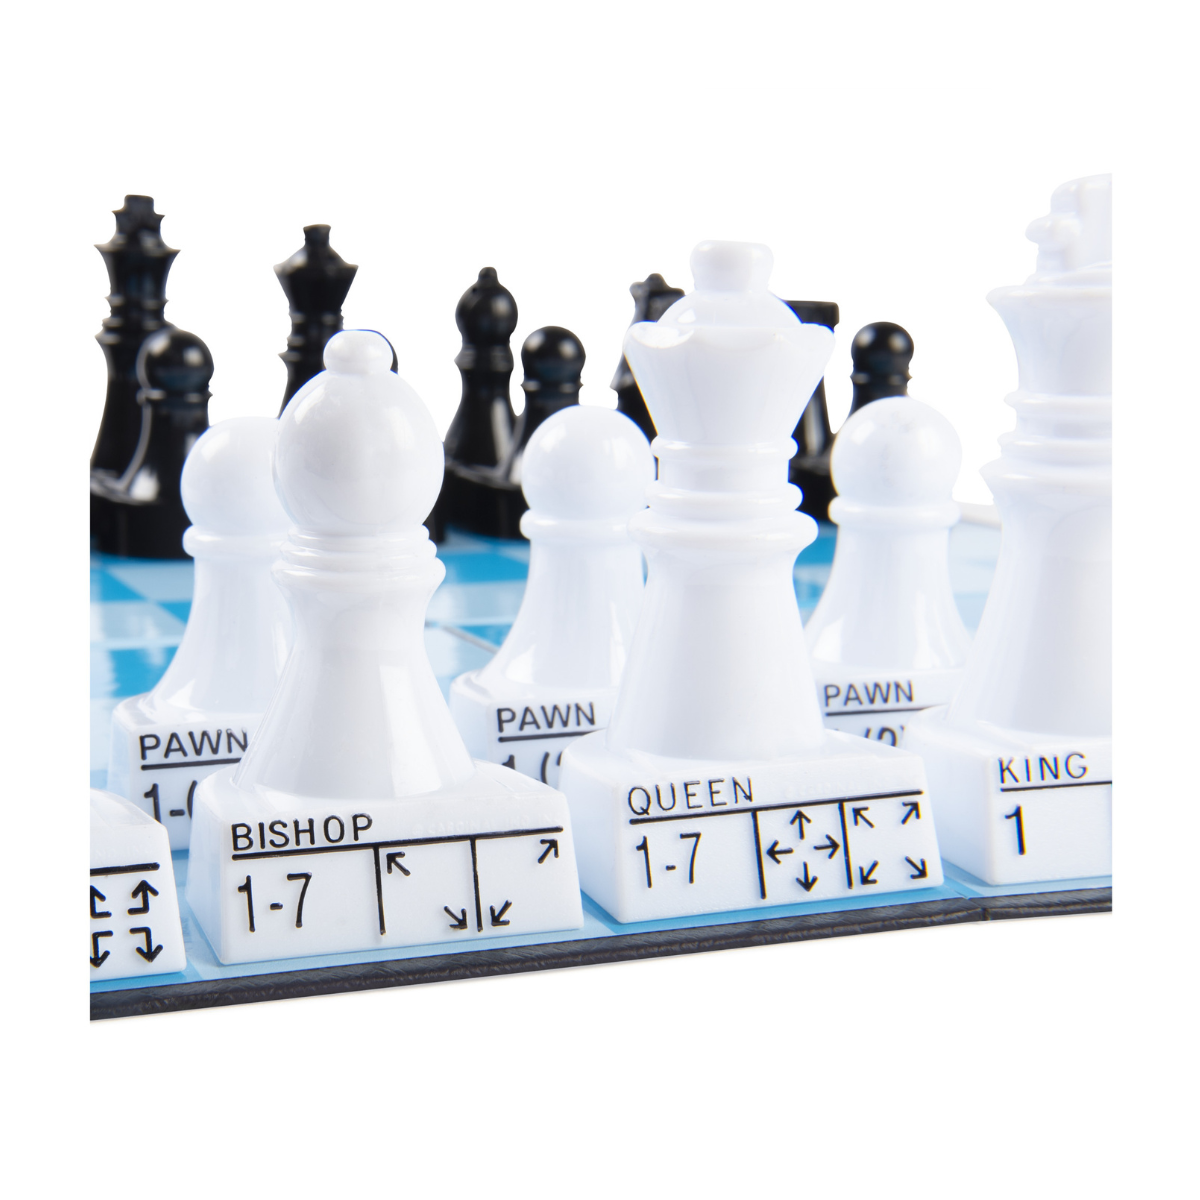 Chessflix - Club de ajedrez 